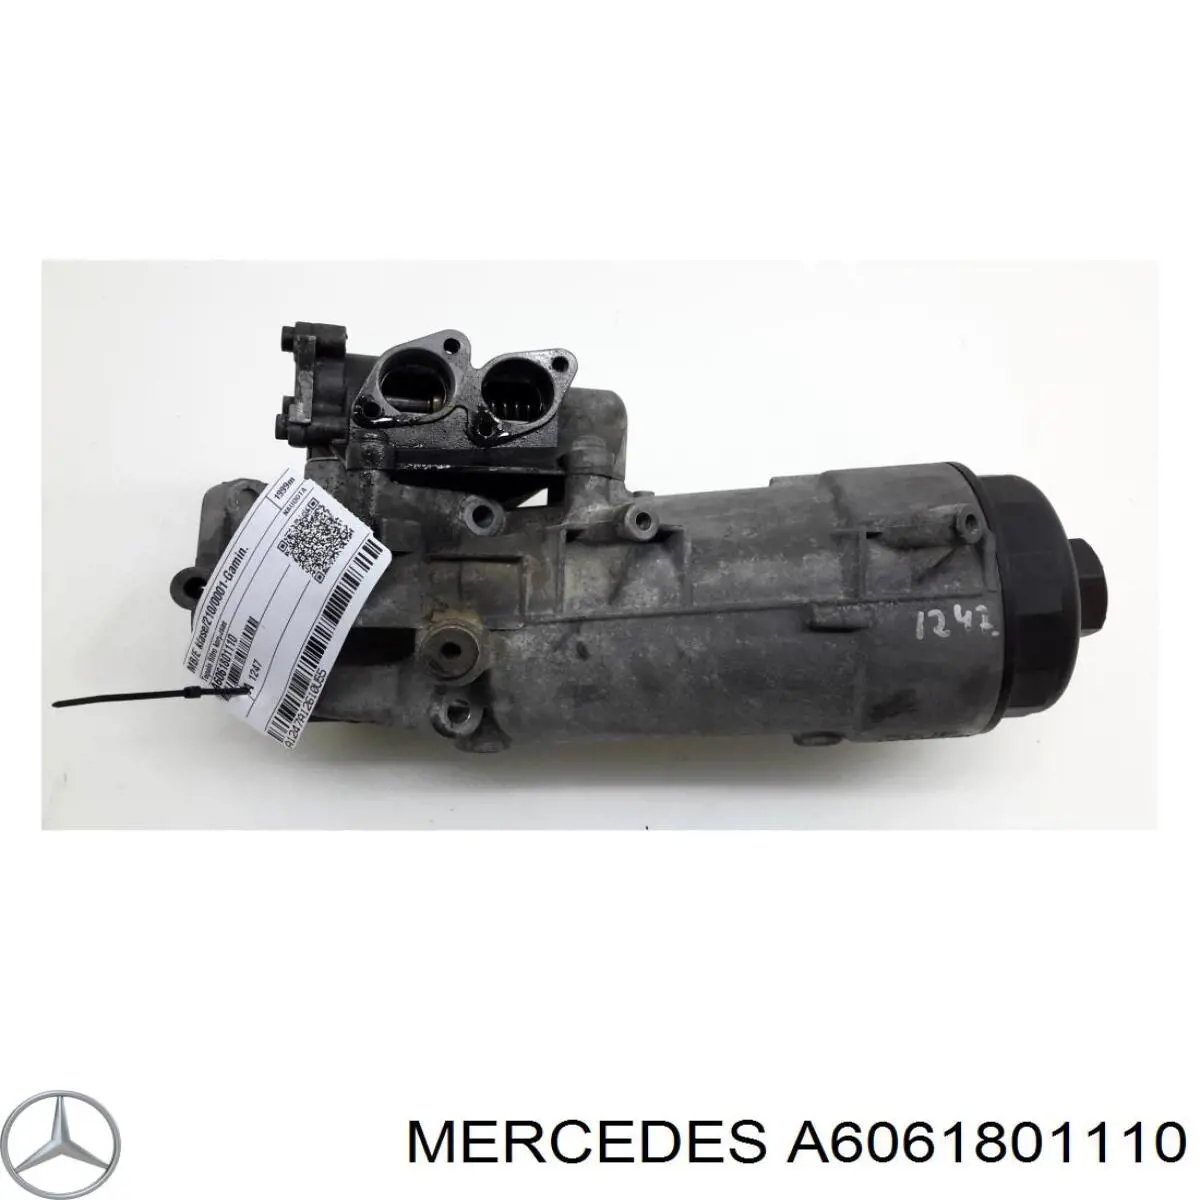 A6061801110 Mercedes корпус масляного фильтра